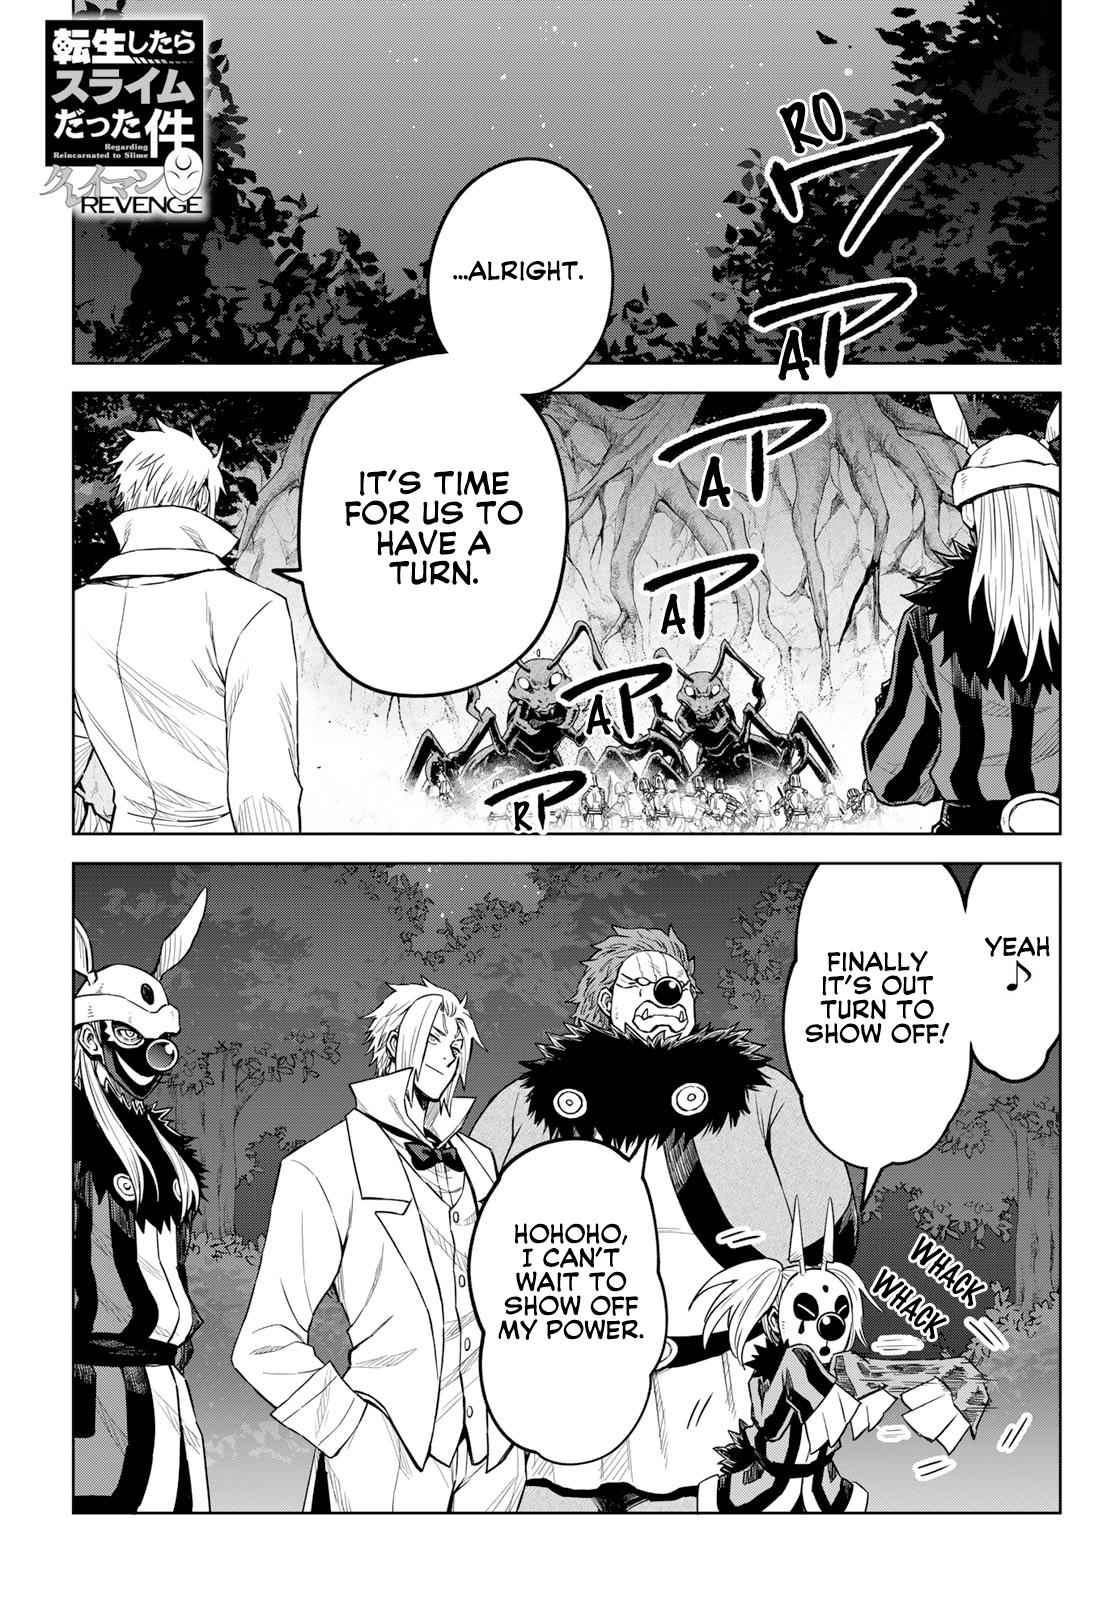 Tensei Shitara Slime Datta Ken: Clayman Revenge - Page 1